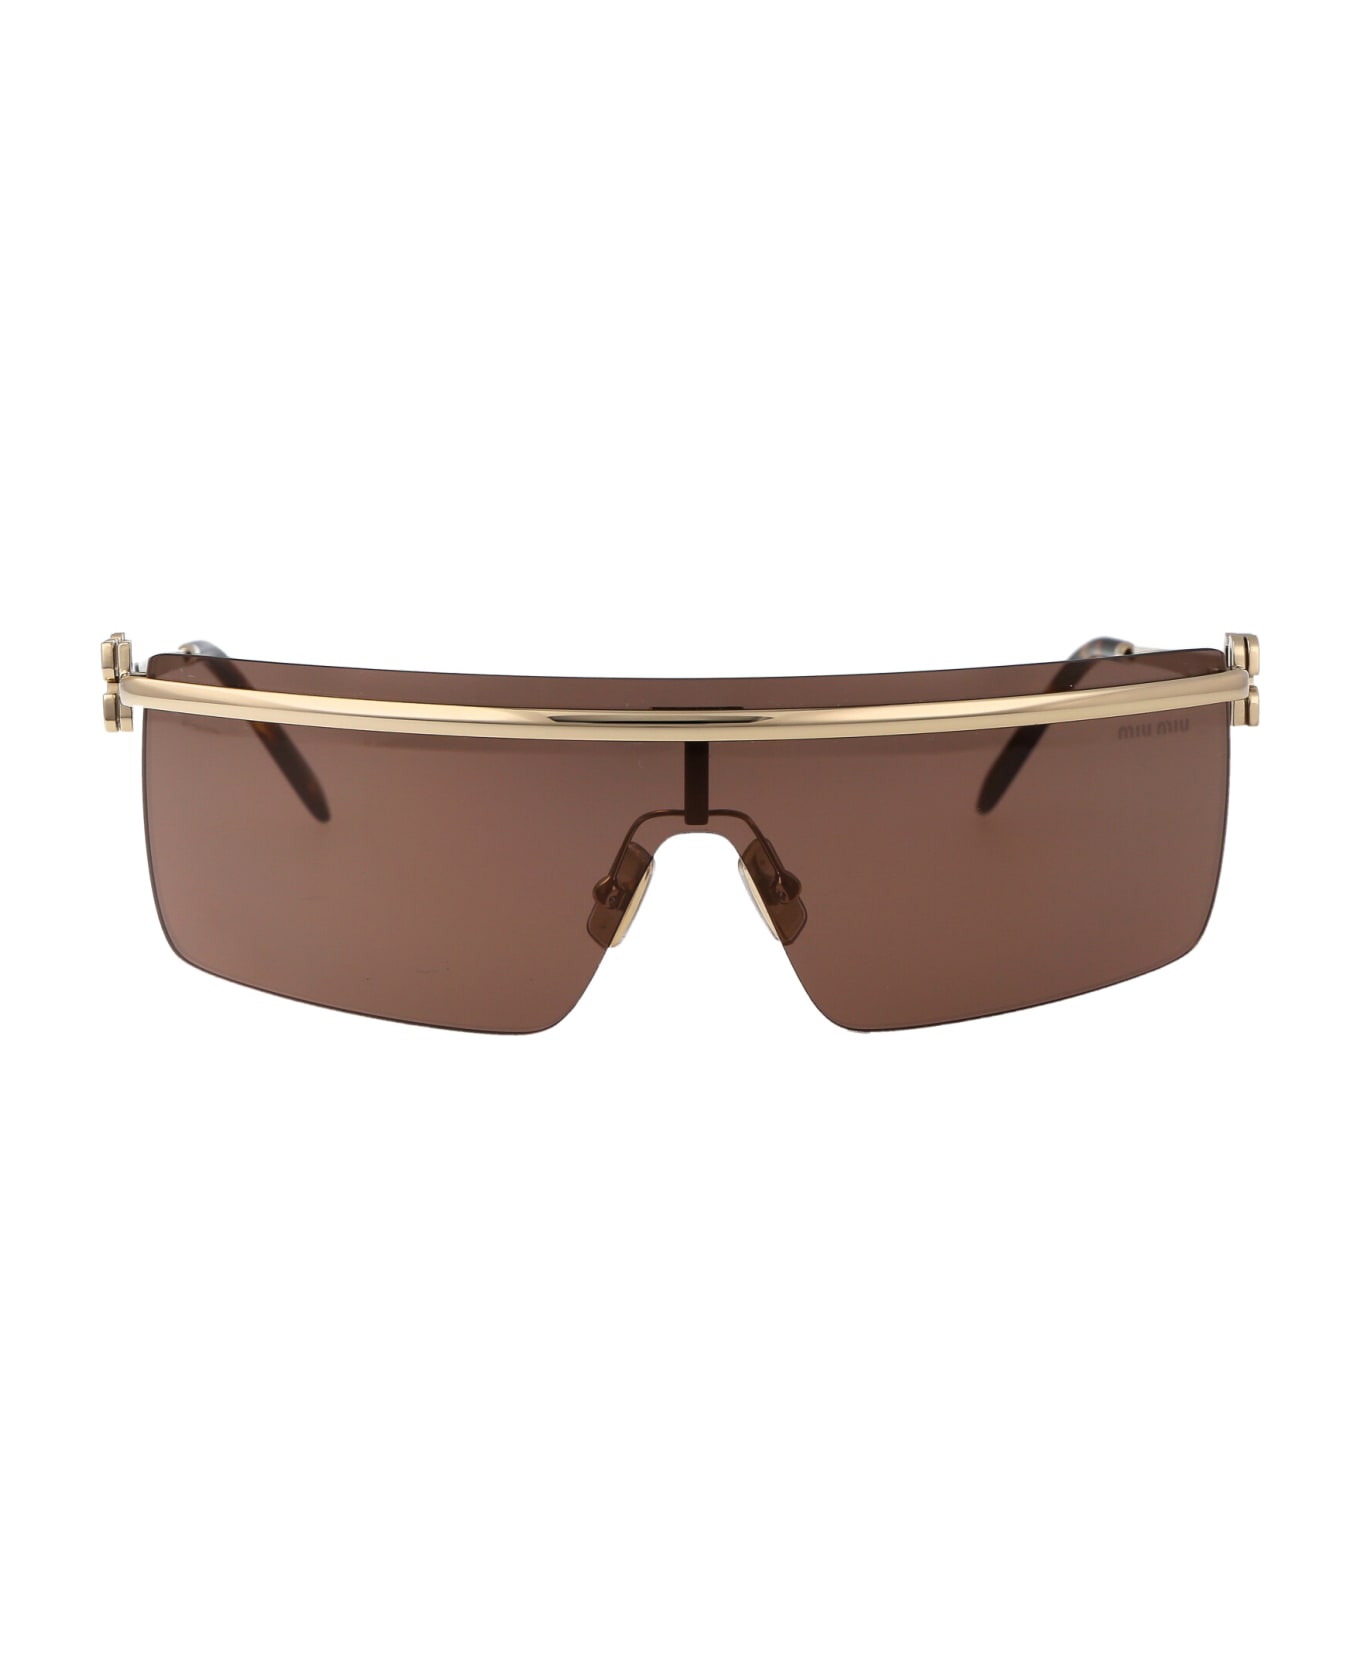 Miu Miu Eyewear 0mu 50zs Sunglasses - ZVN70D Pale Gold